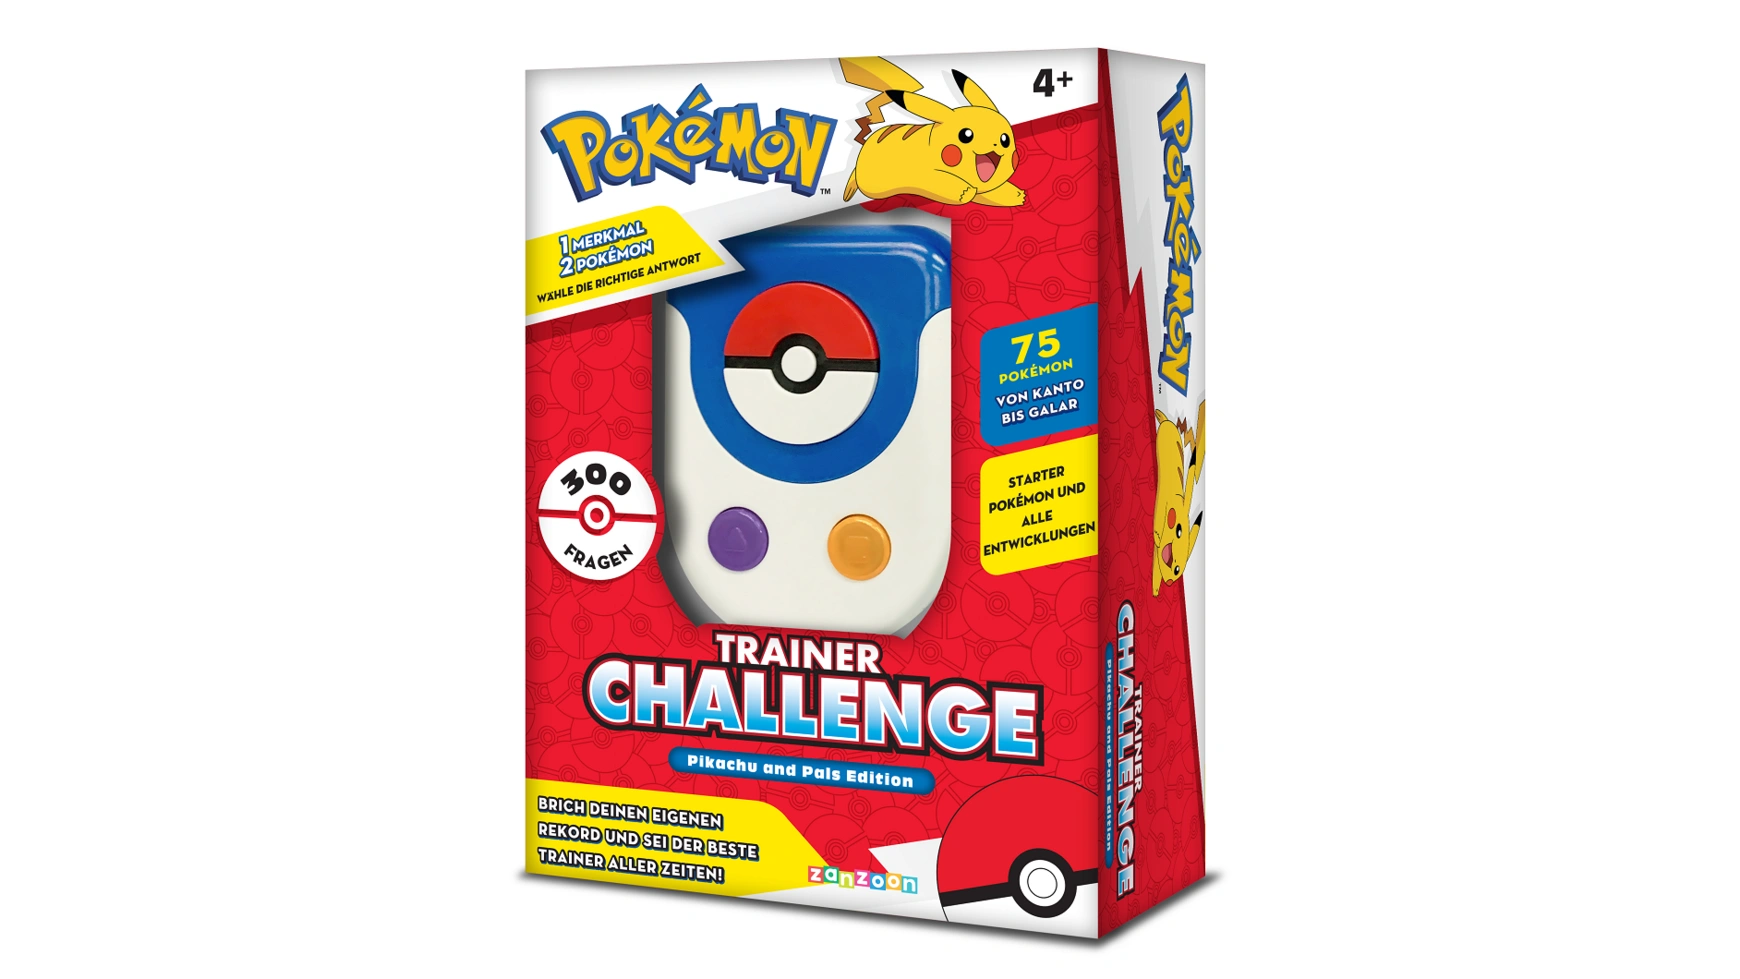 BOTI Pokémon Trainer Challenge Pikachu and Pals Edition цена и фото